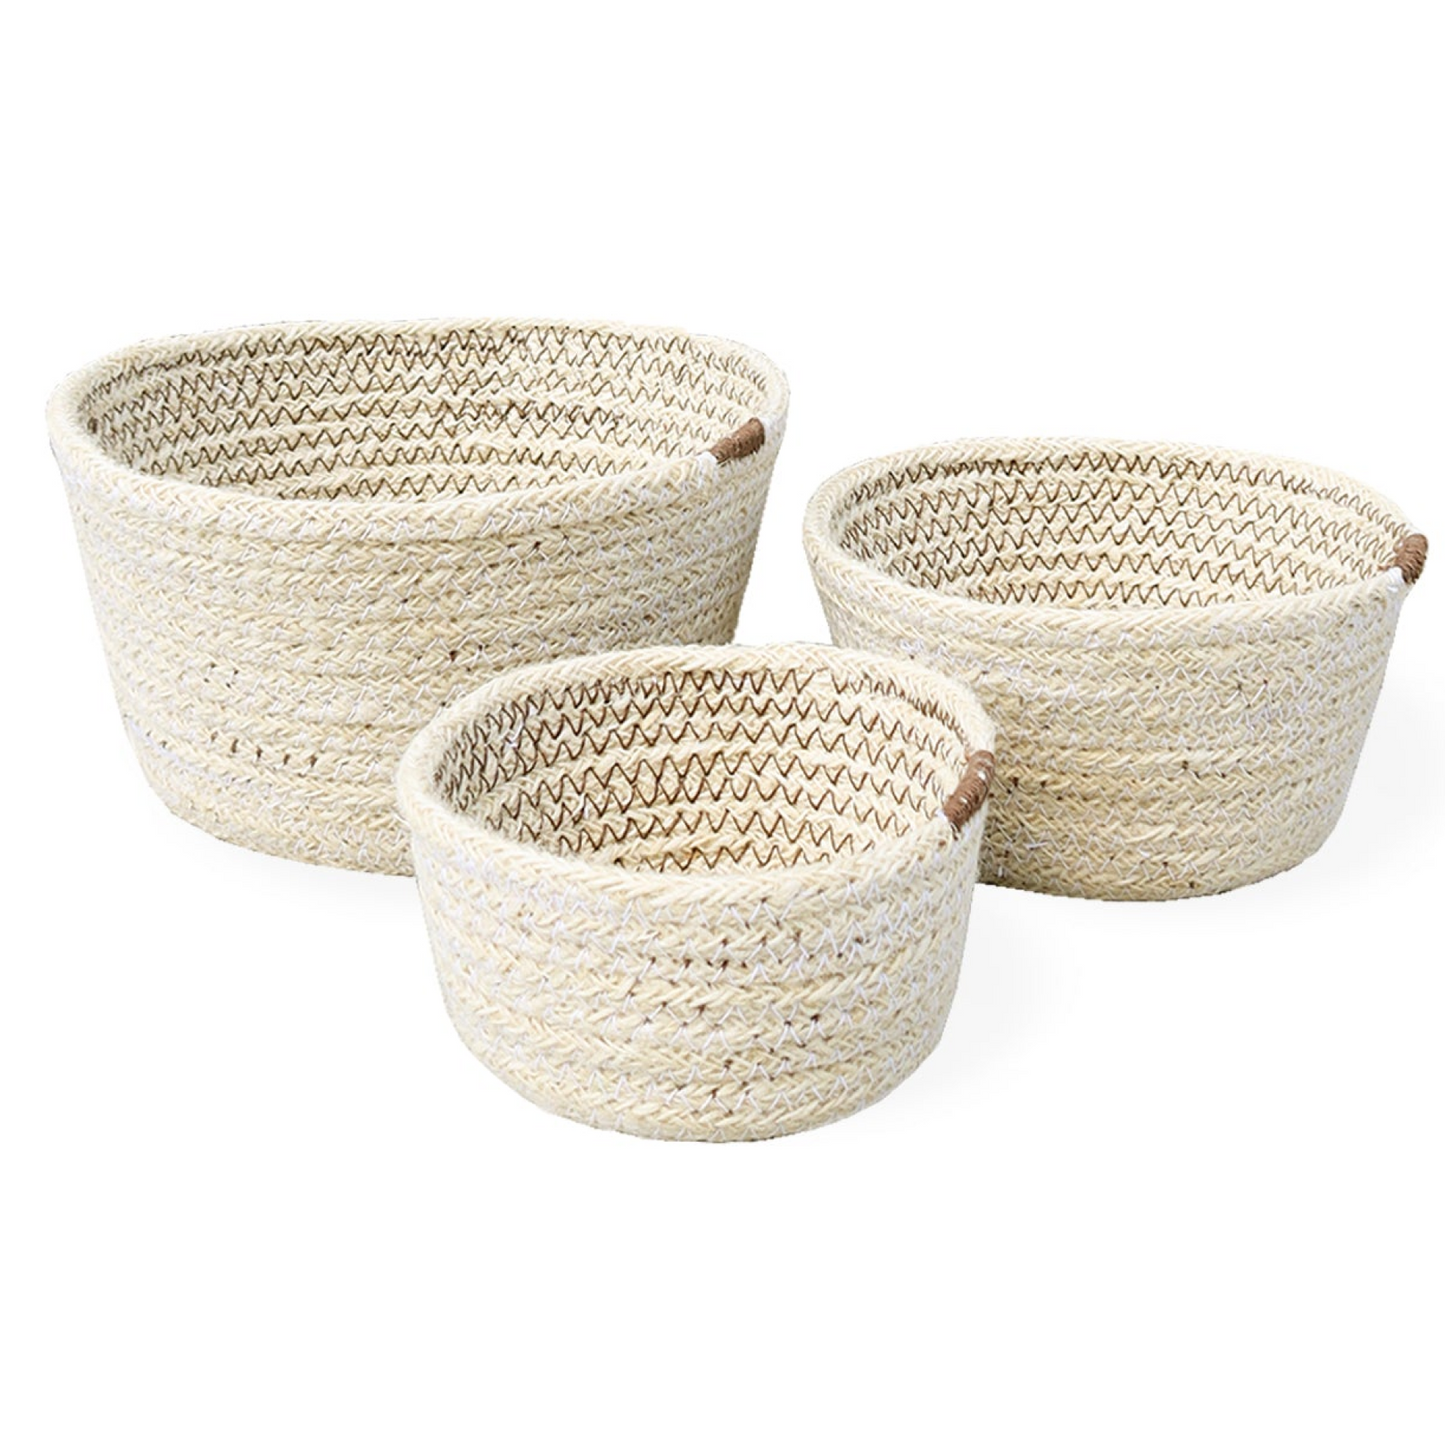 Handwoven Storage Baskets - Natural. Set of 3